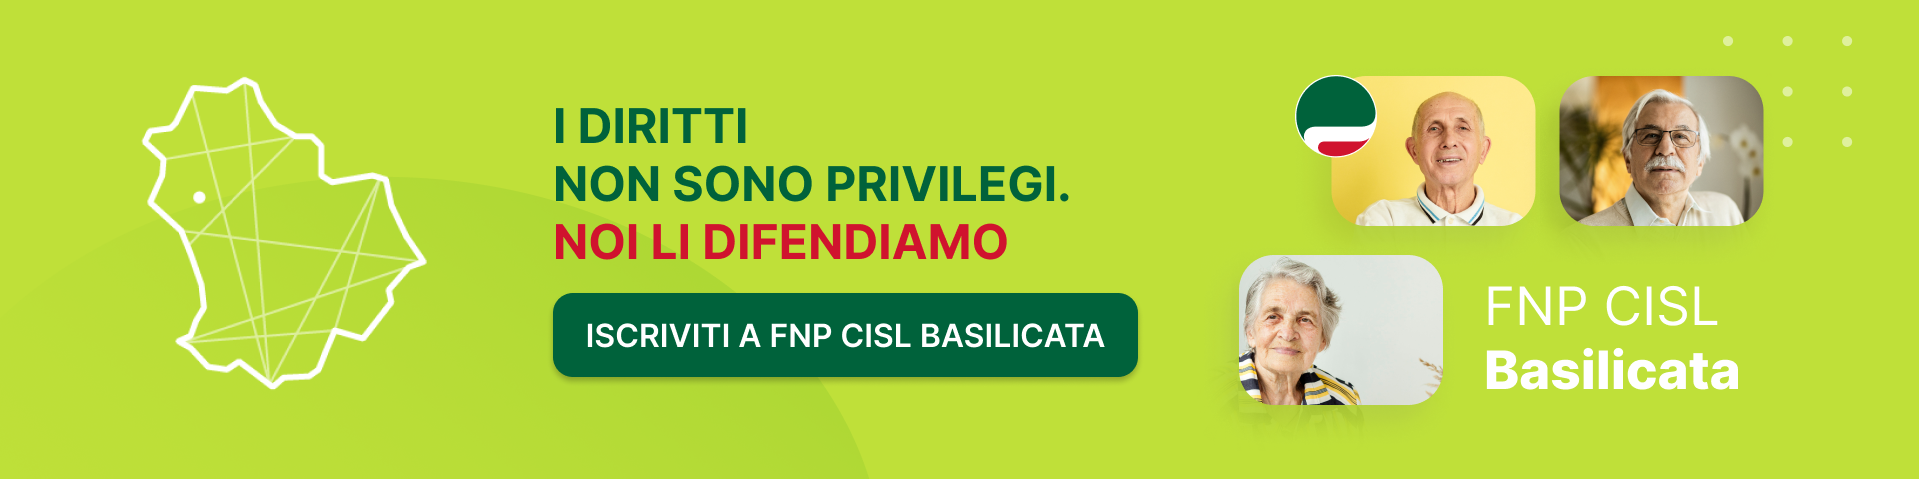 FNP CISL Basilicata - I diritti non sono privilegi. NOI LI DIFENDIAMO